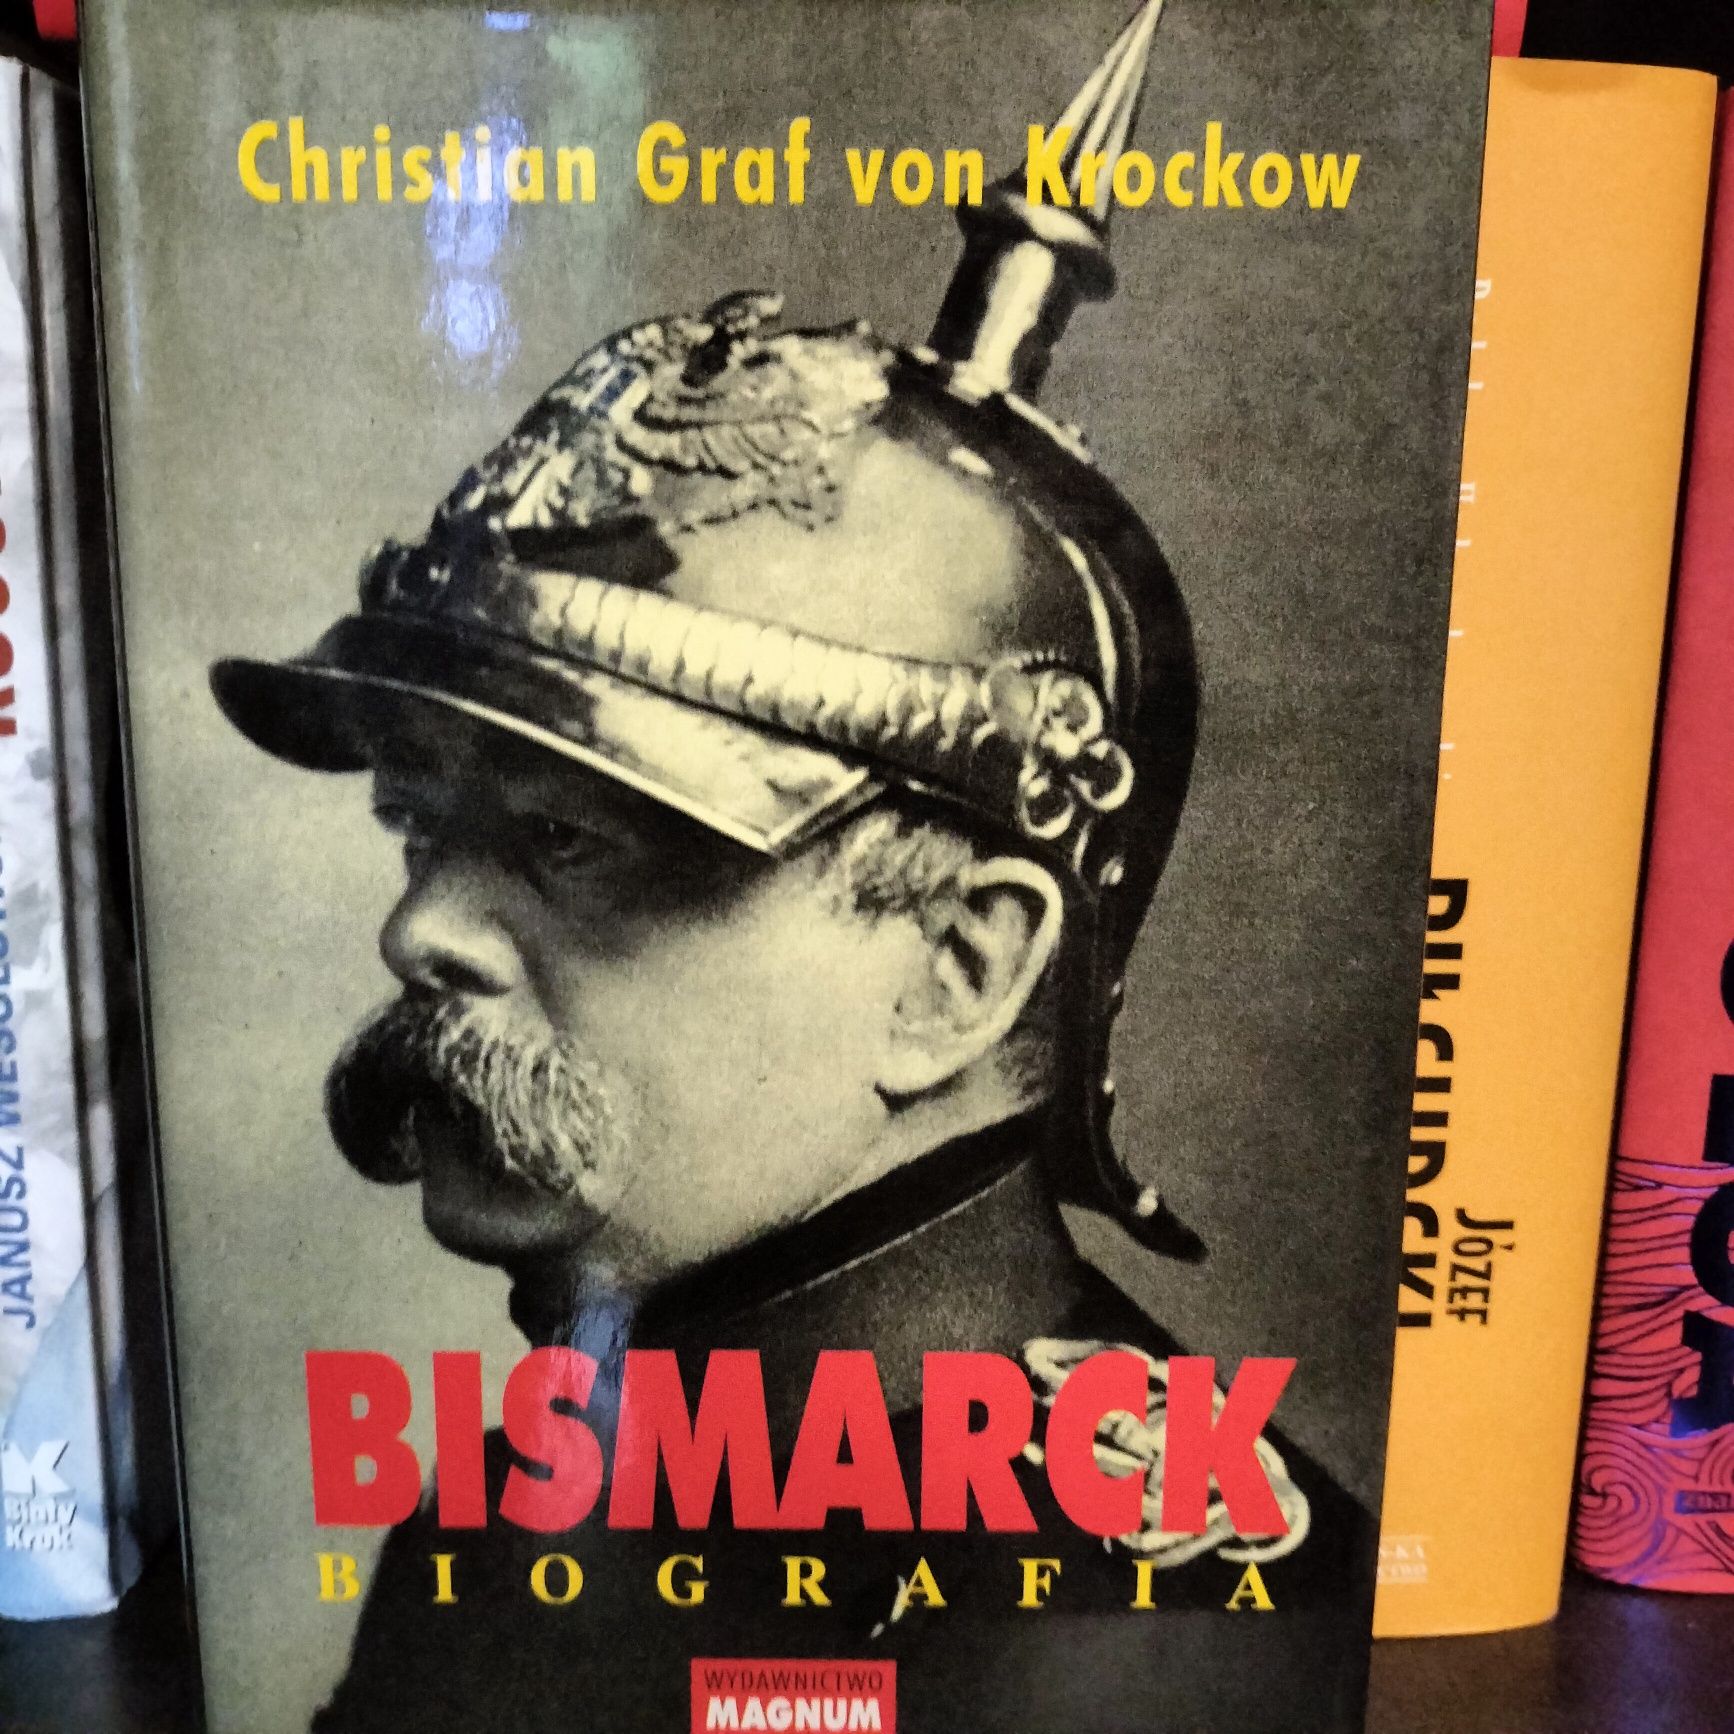 Bismarck Biografia Krockow